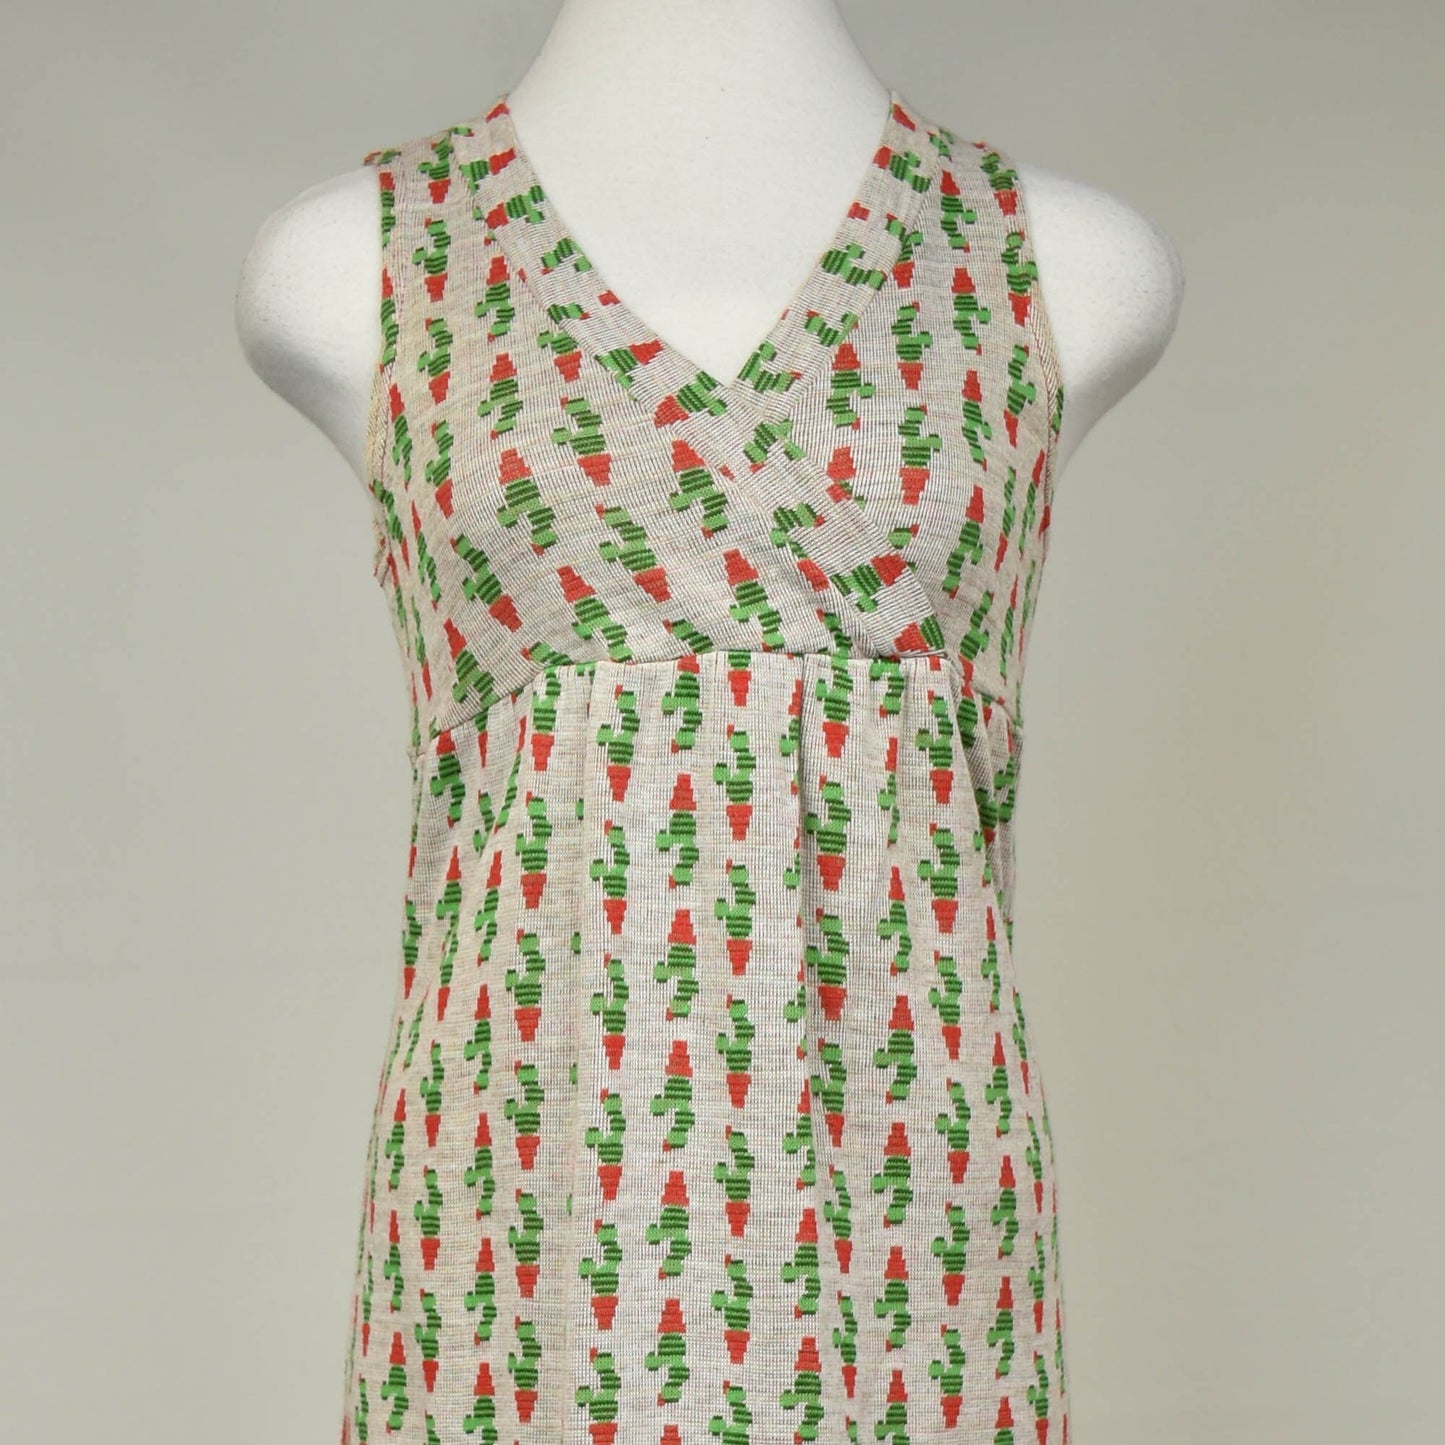 Vintage 70s Long Knit Dress by Utopia - Cactus Print - Medium Size - Acrylic